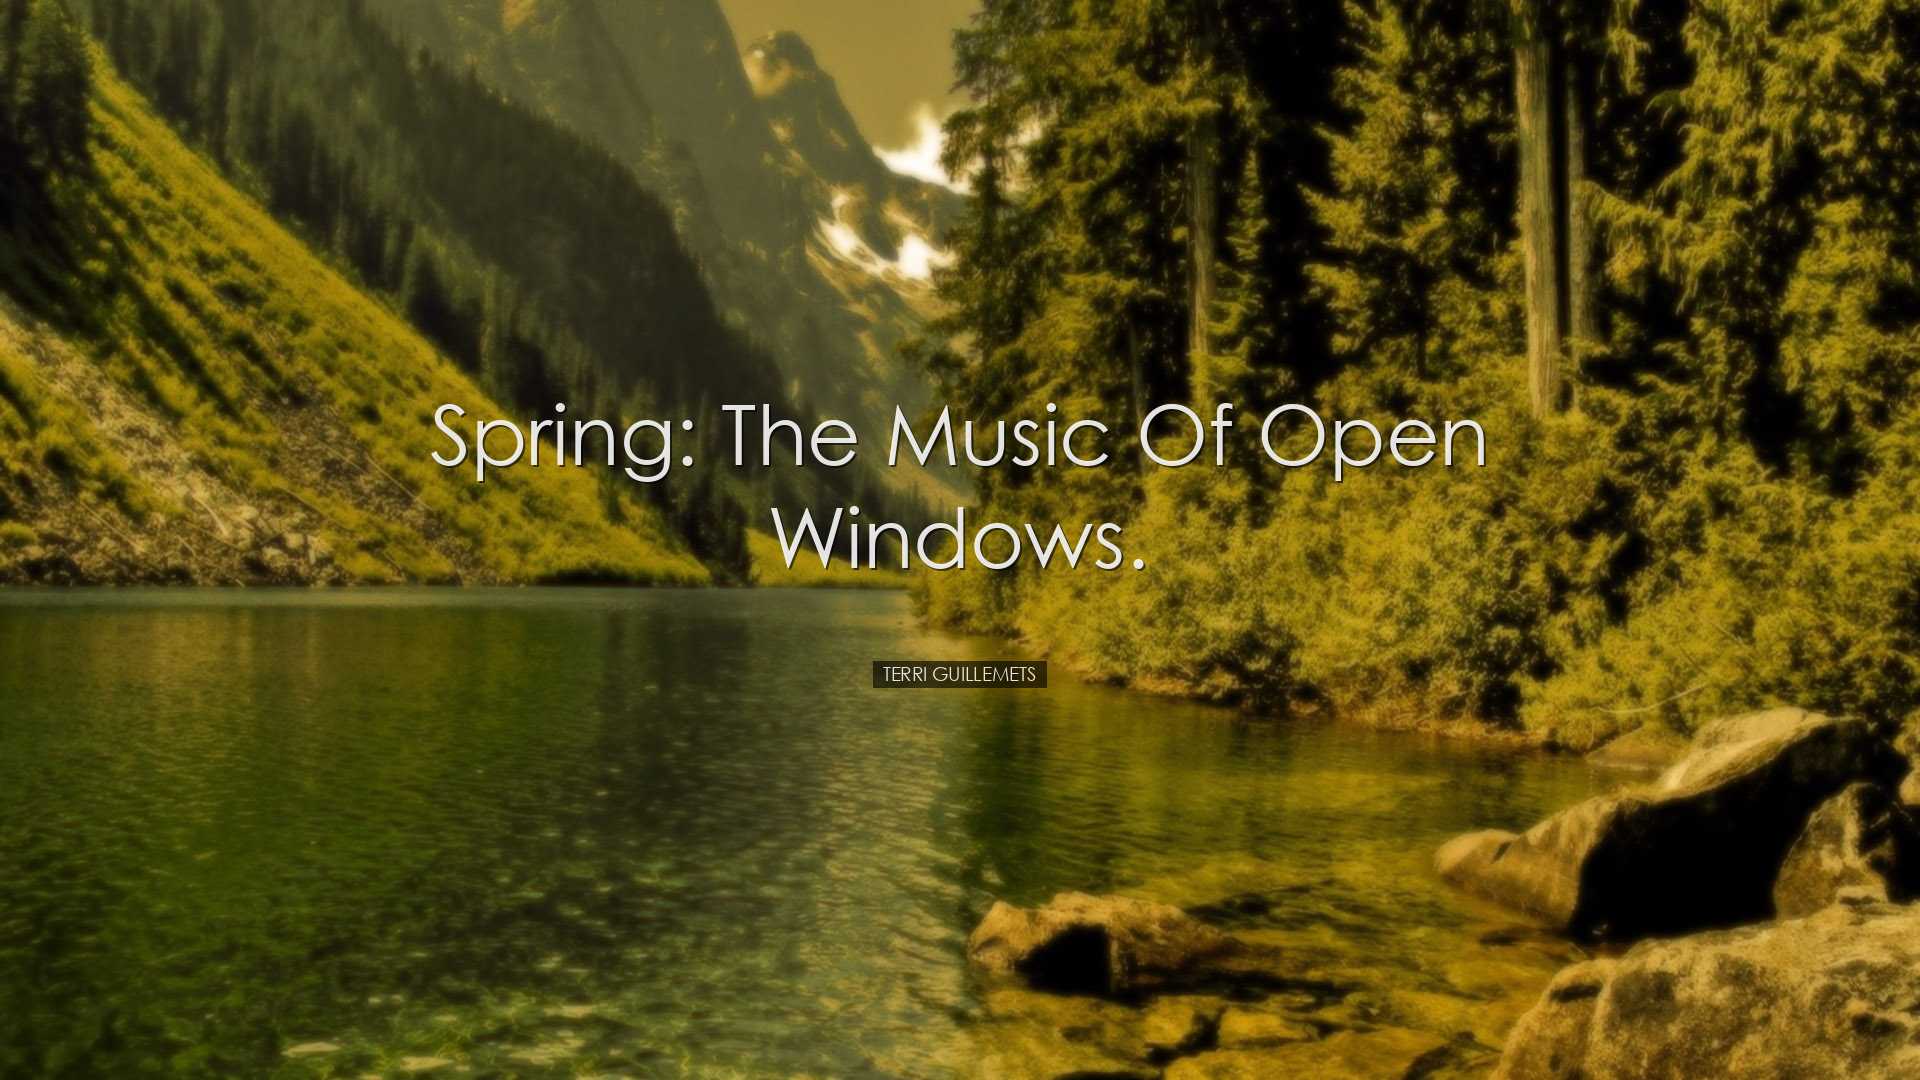 Spring: the music of open windows. - Terri Guillemets